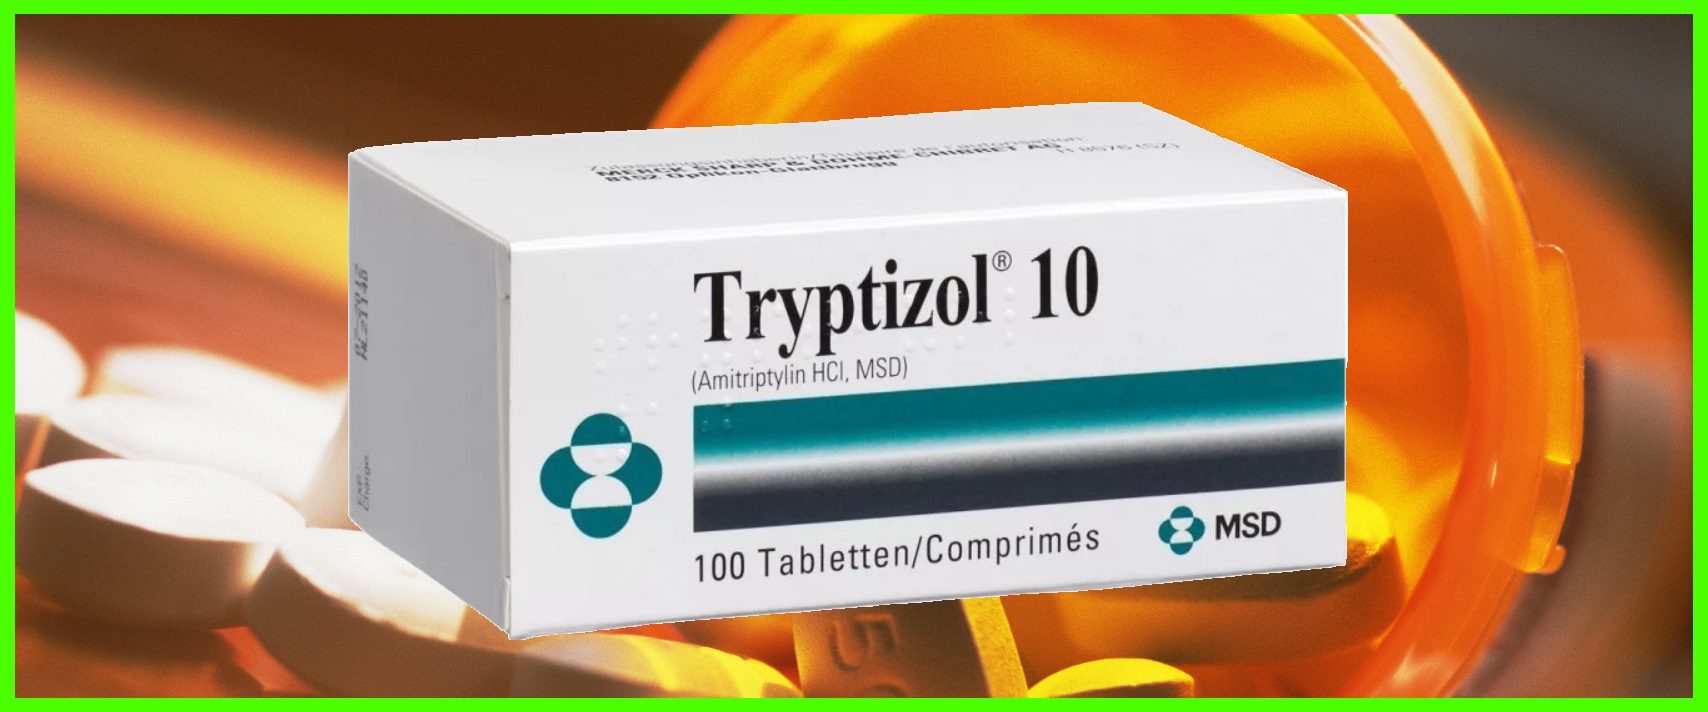 Tryptizol pérdida de peso